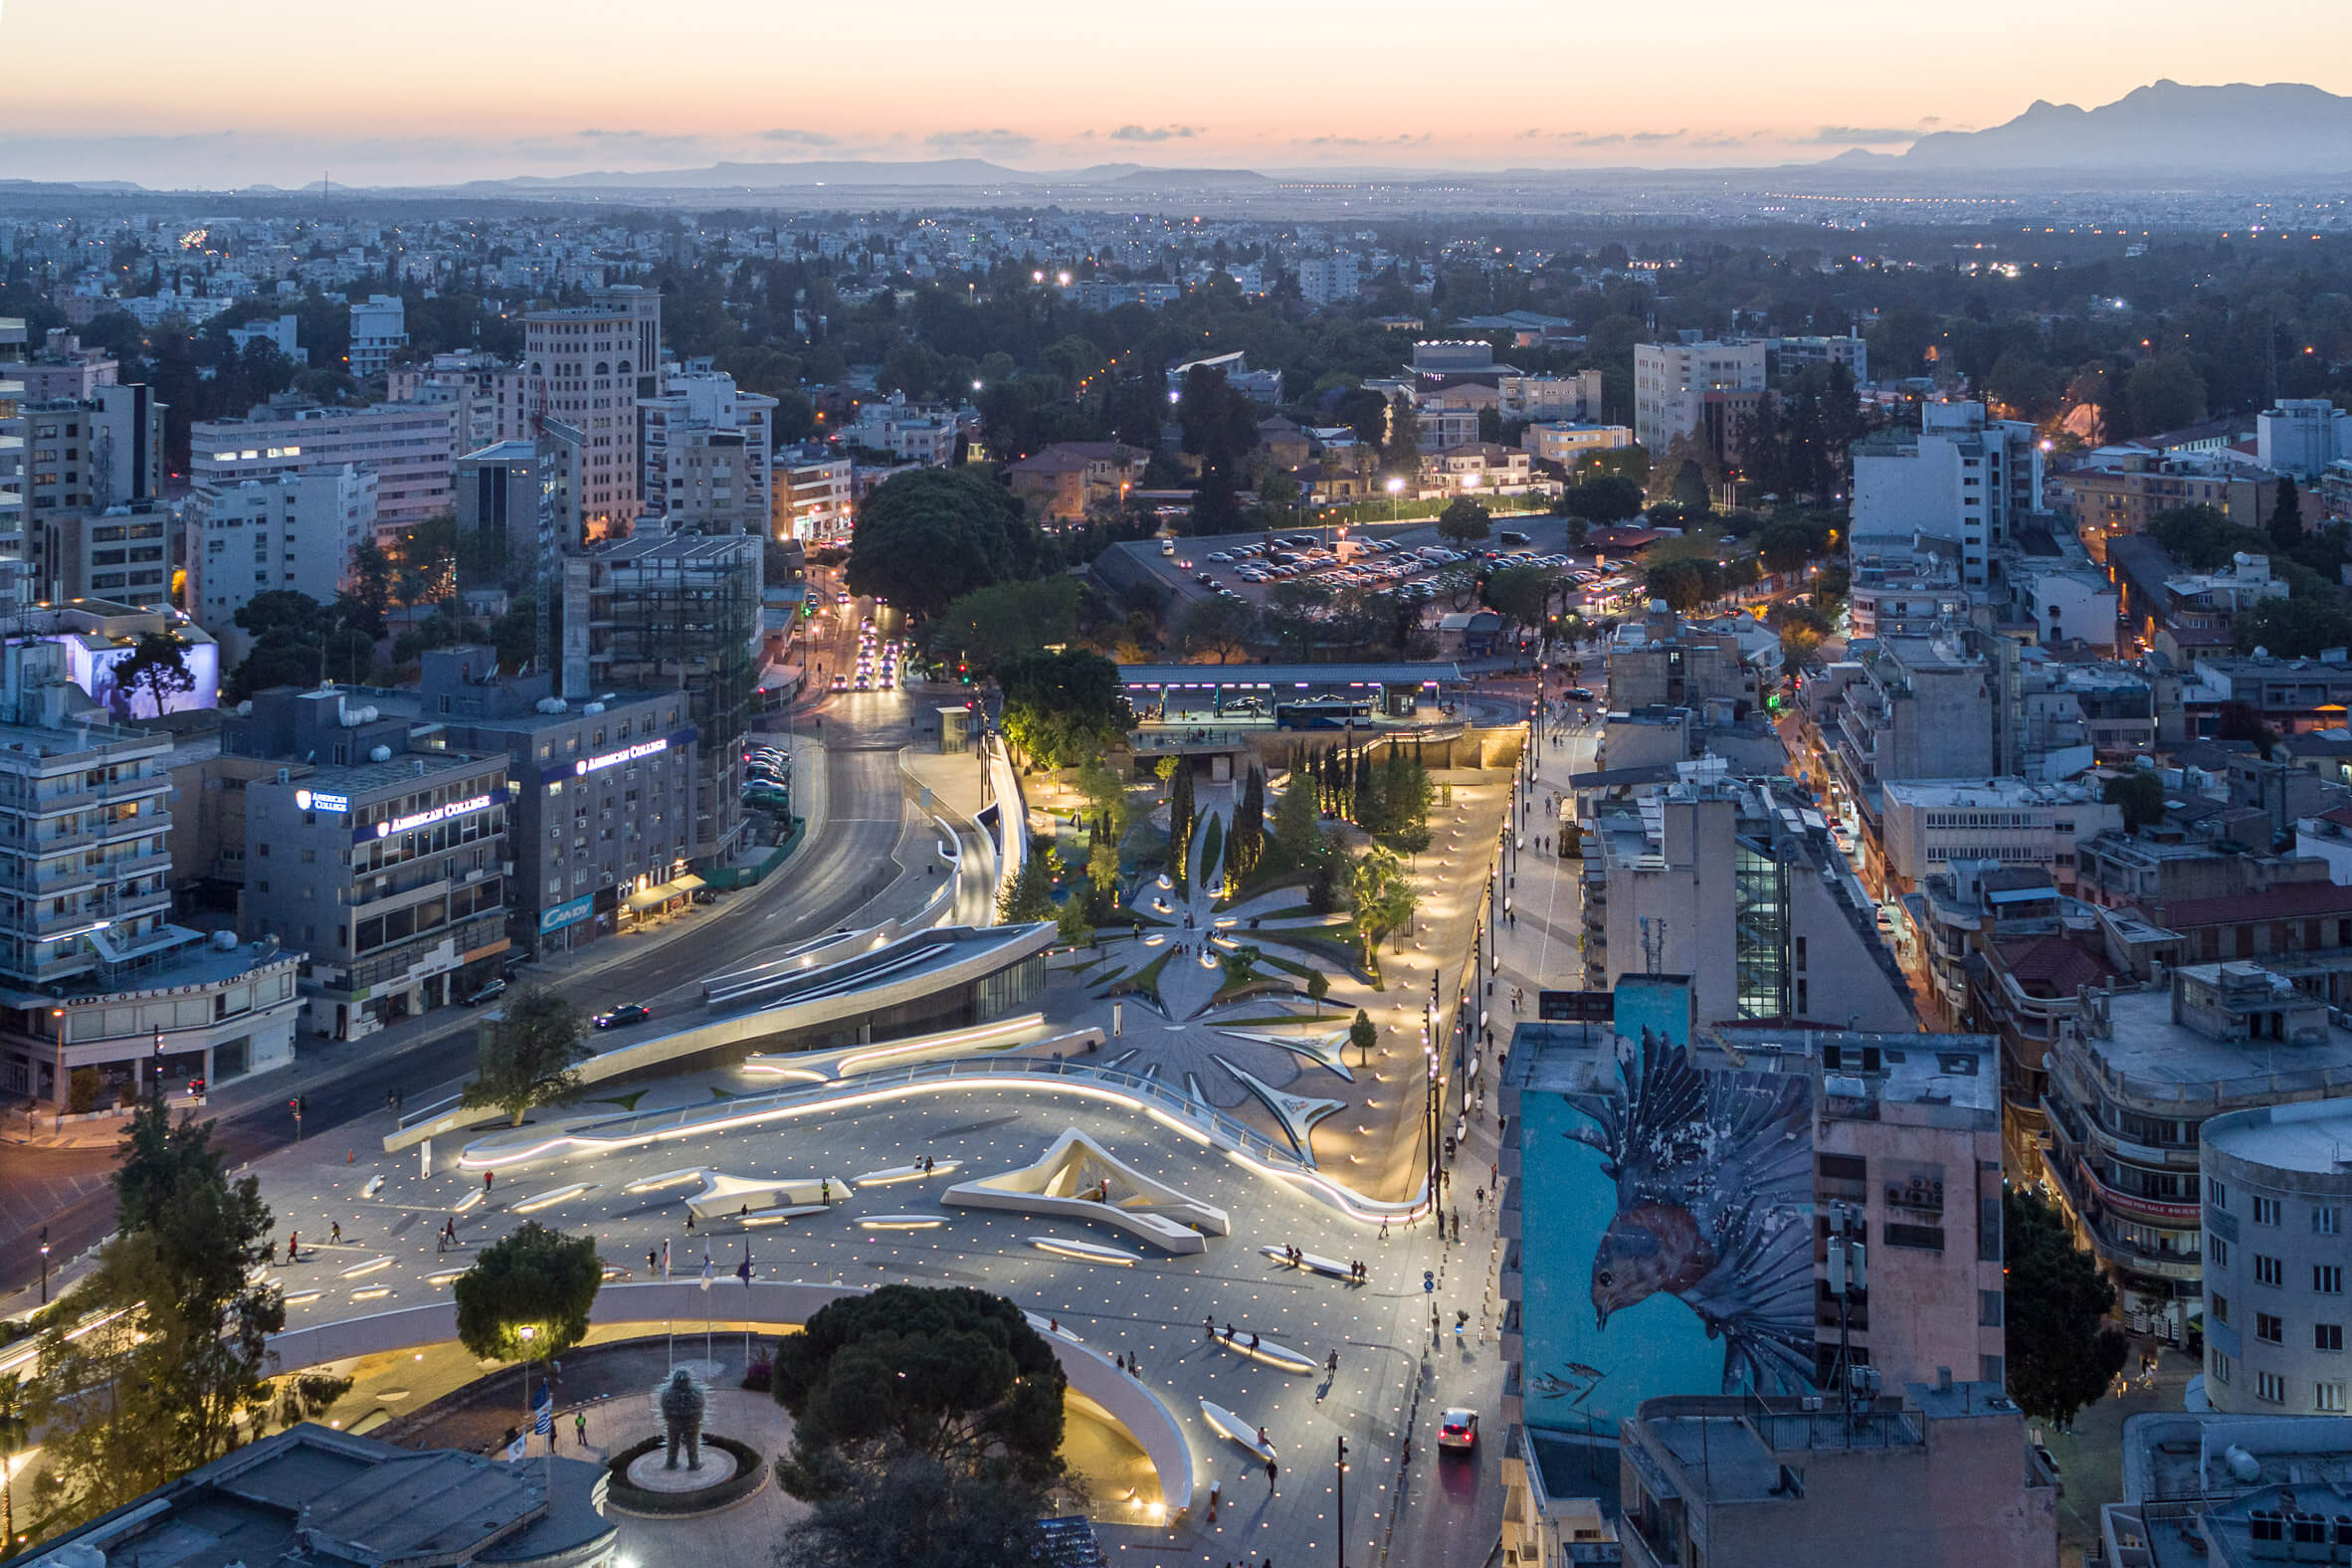 Eleftheria Square | Zaha Hadid Architects